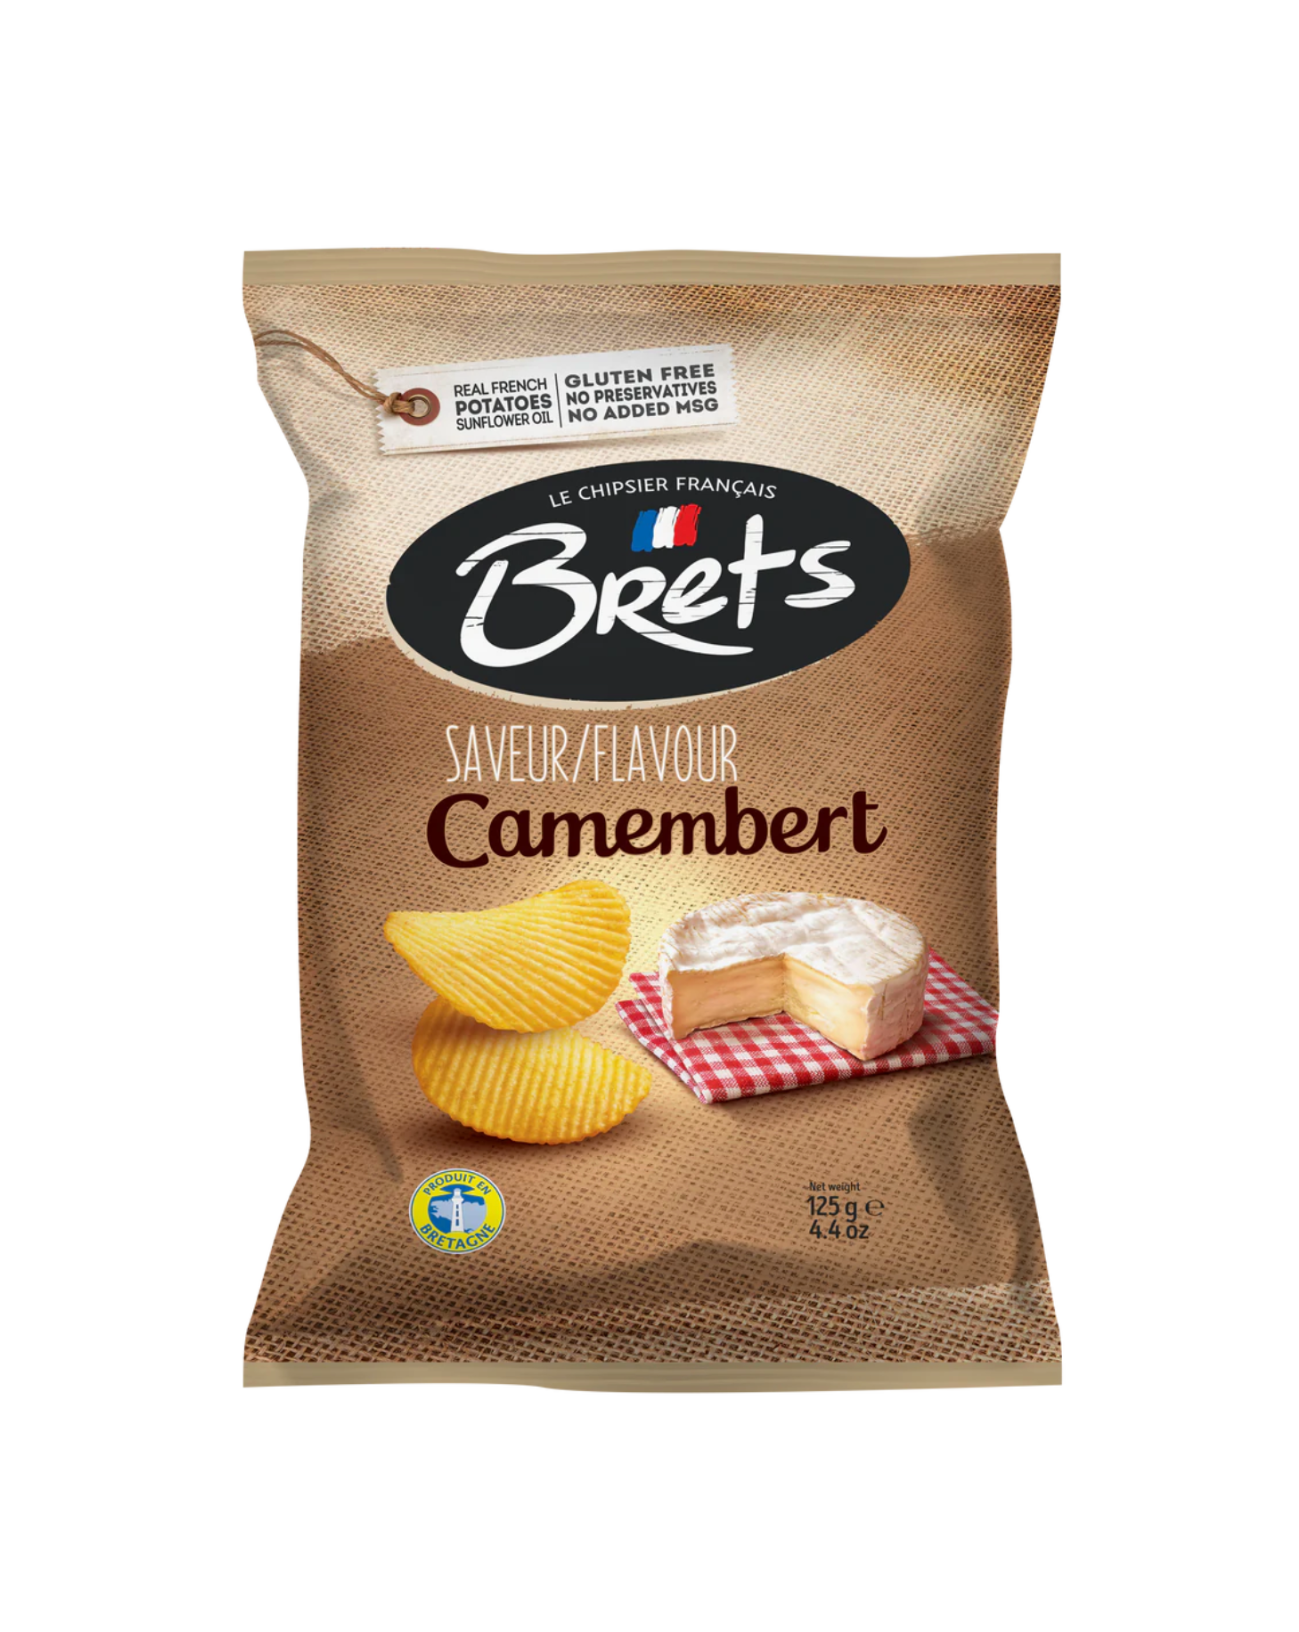 Brets camembert potato chips bag